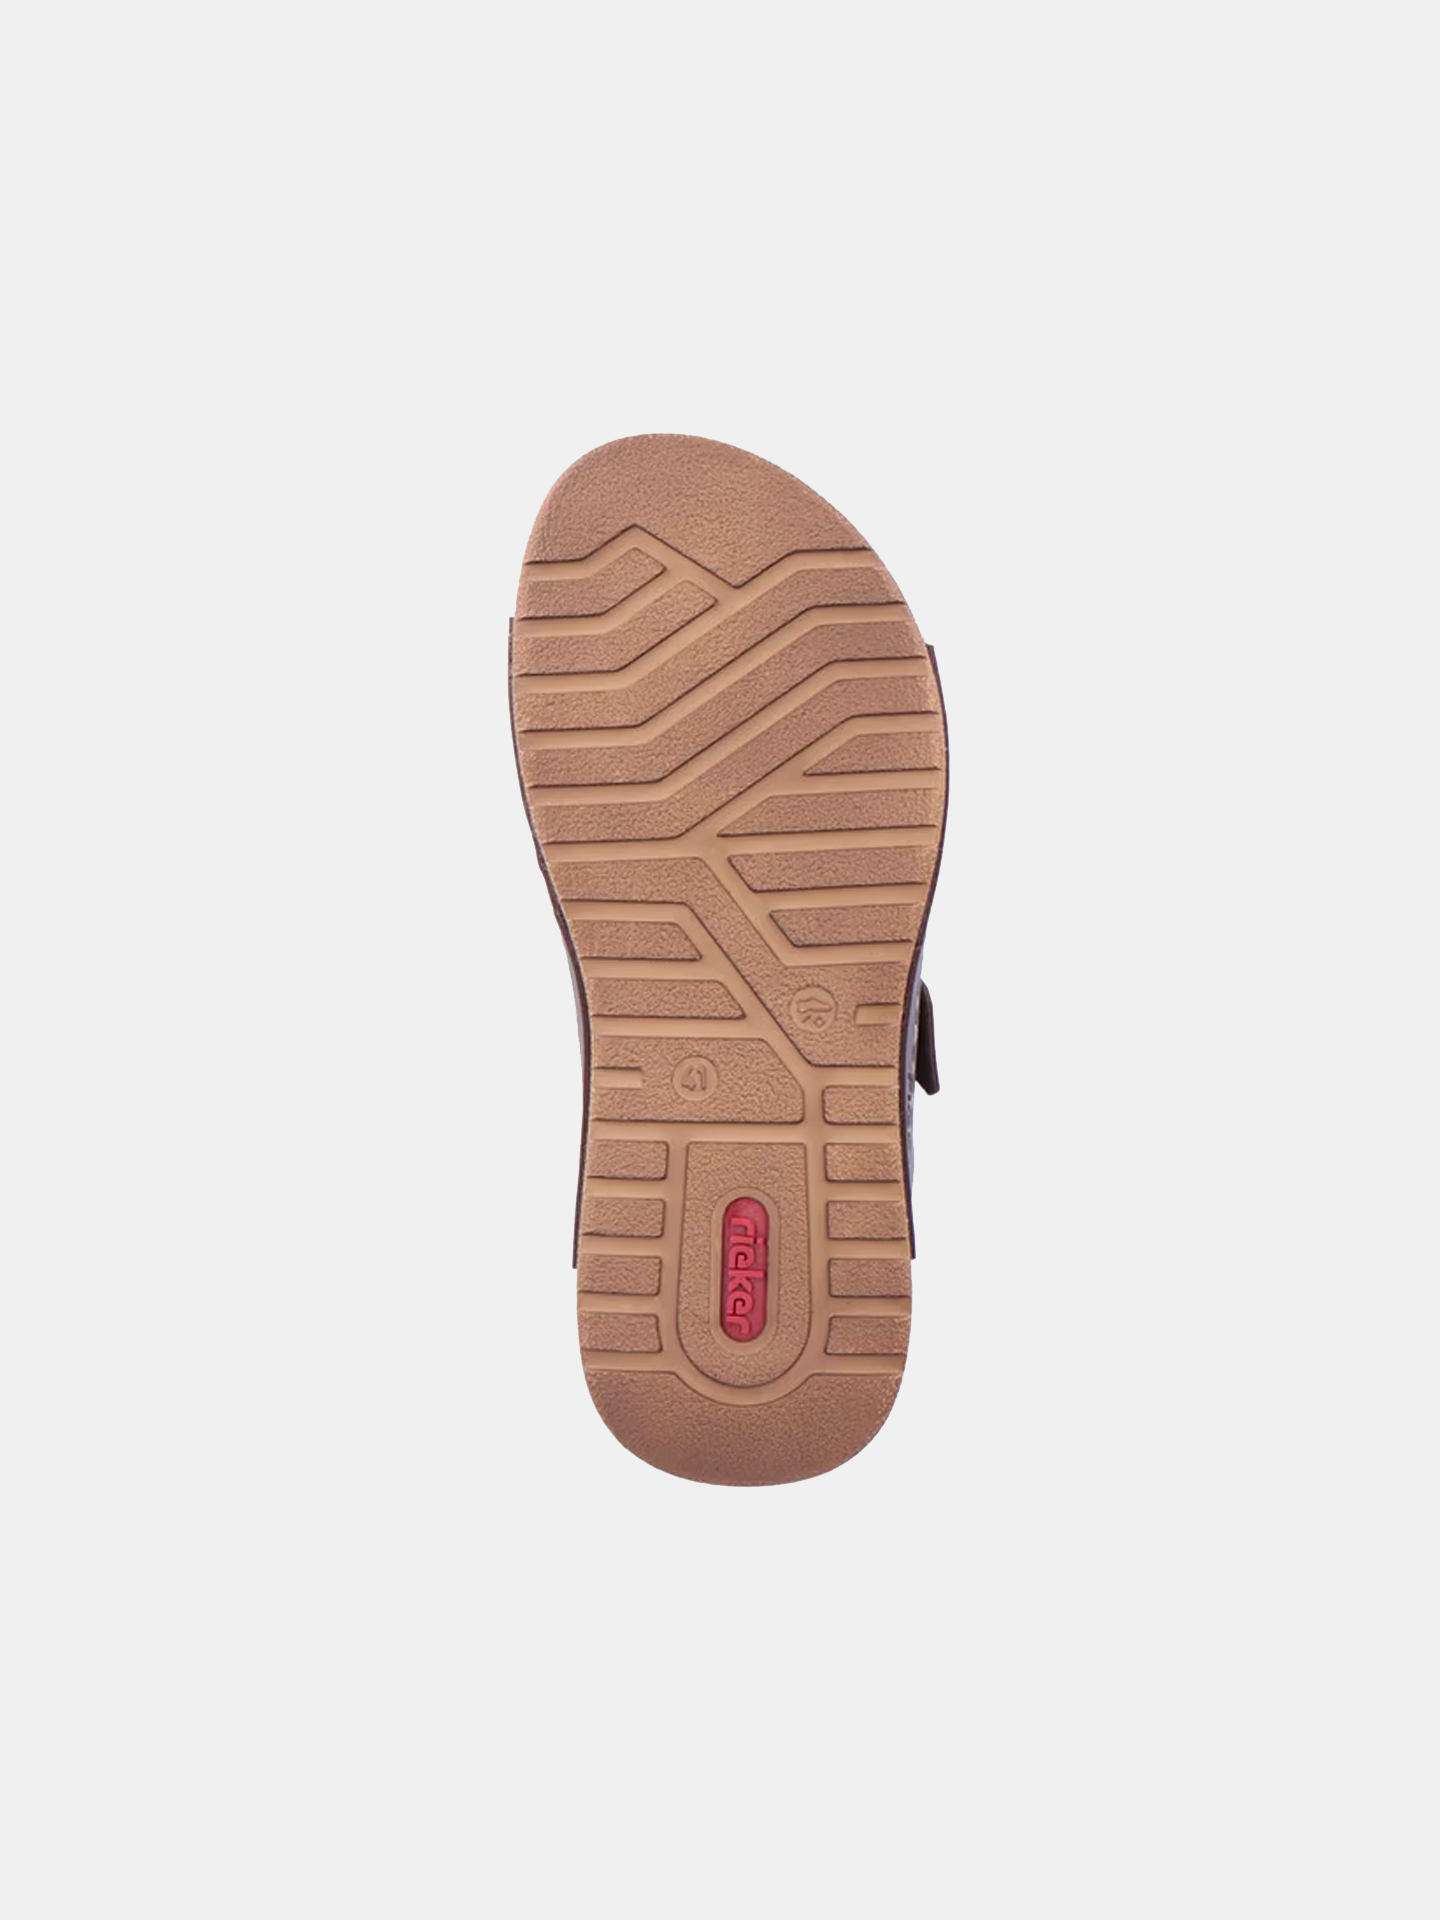 Rieker 21997 Men's Slider Sandals